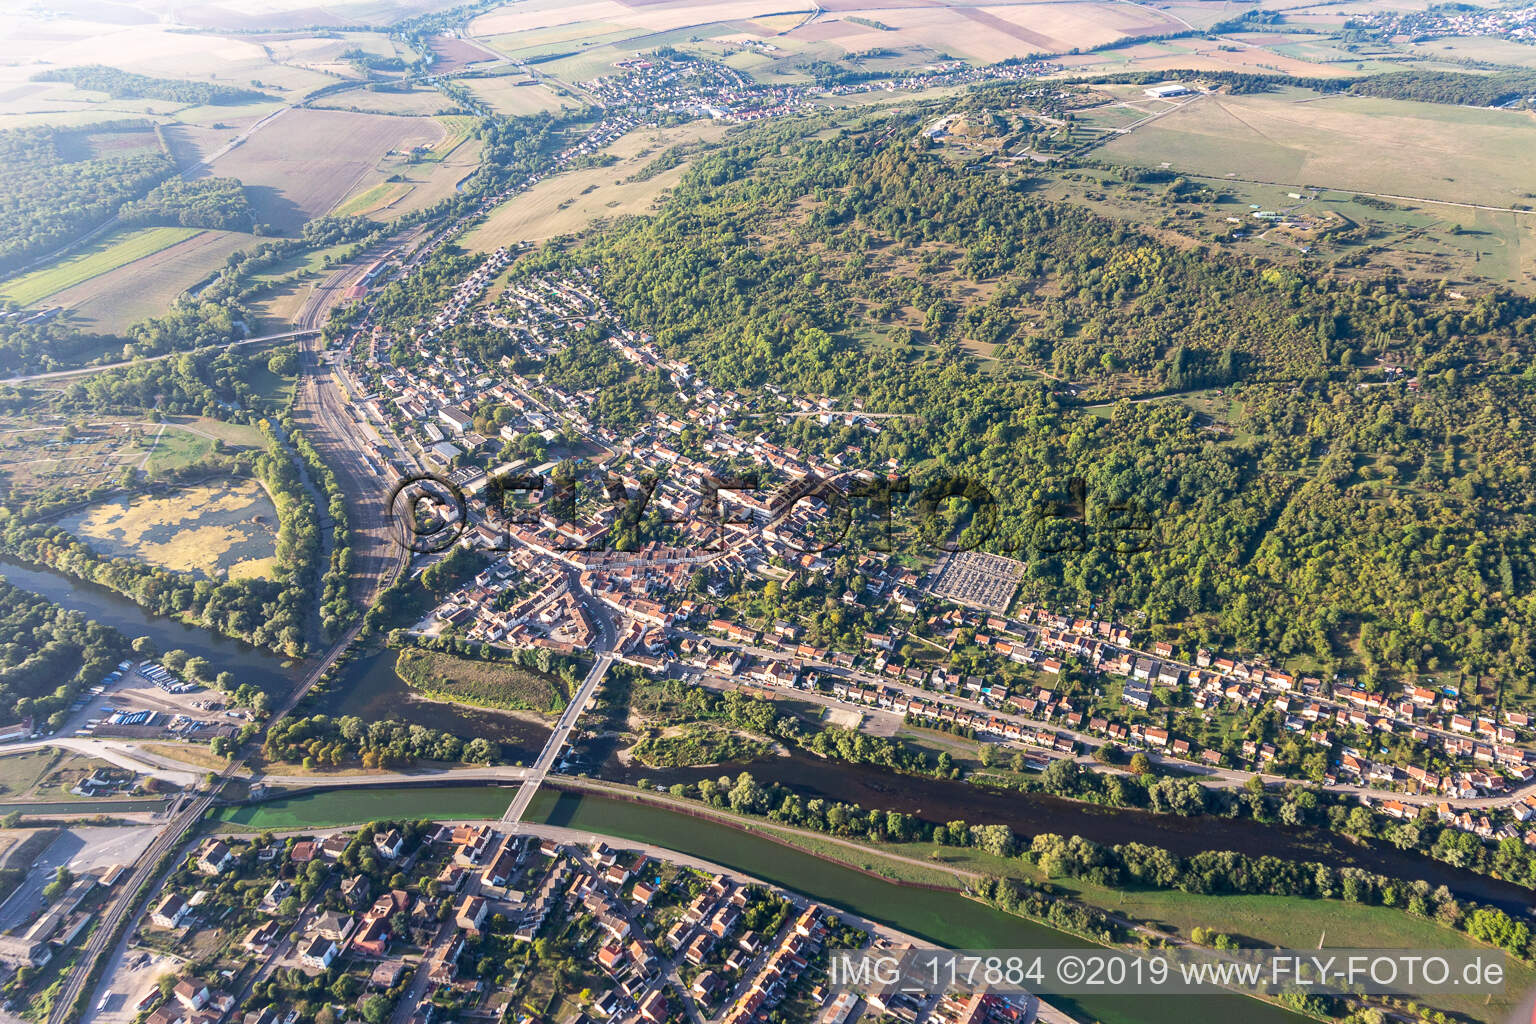 Luftbild von Pont-Saint-Vincent im Bundesland Meurthe-et-Moselle, Frankreich